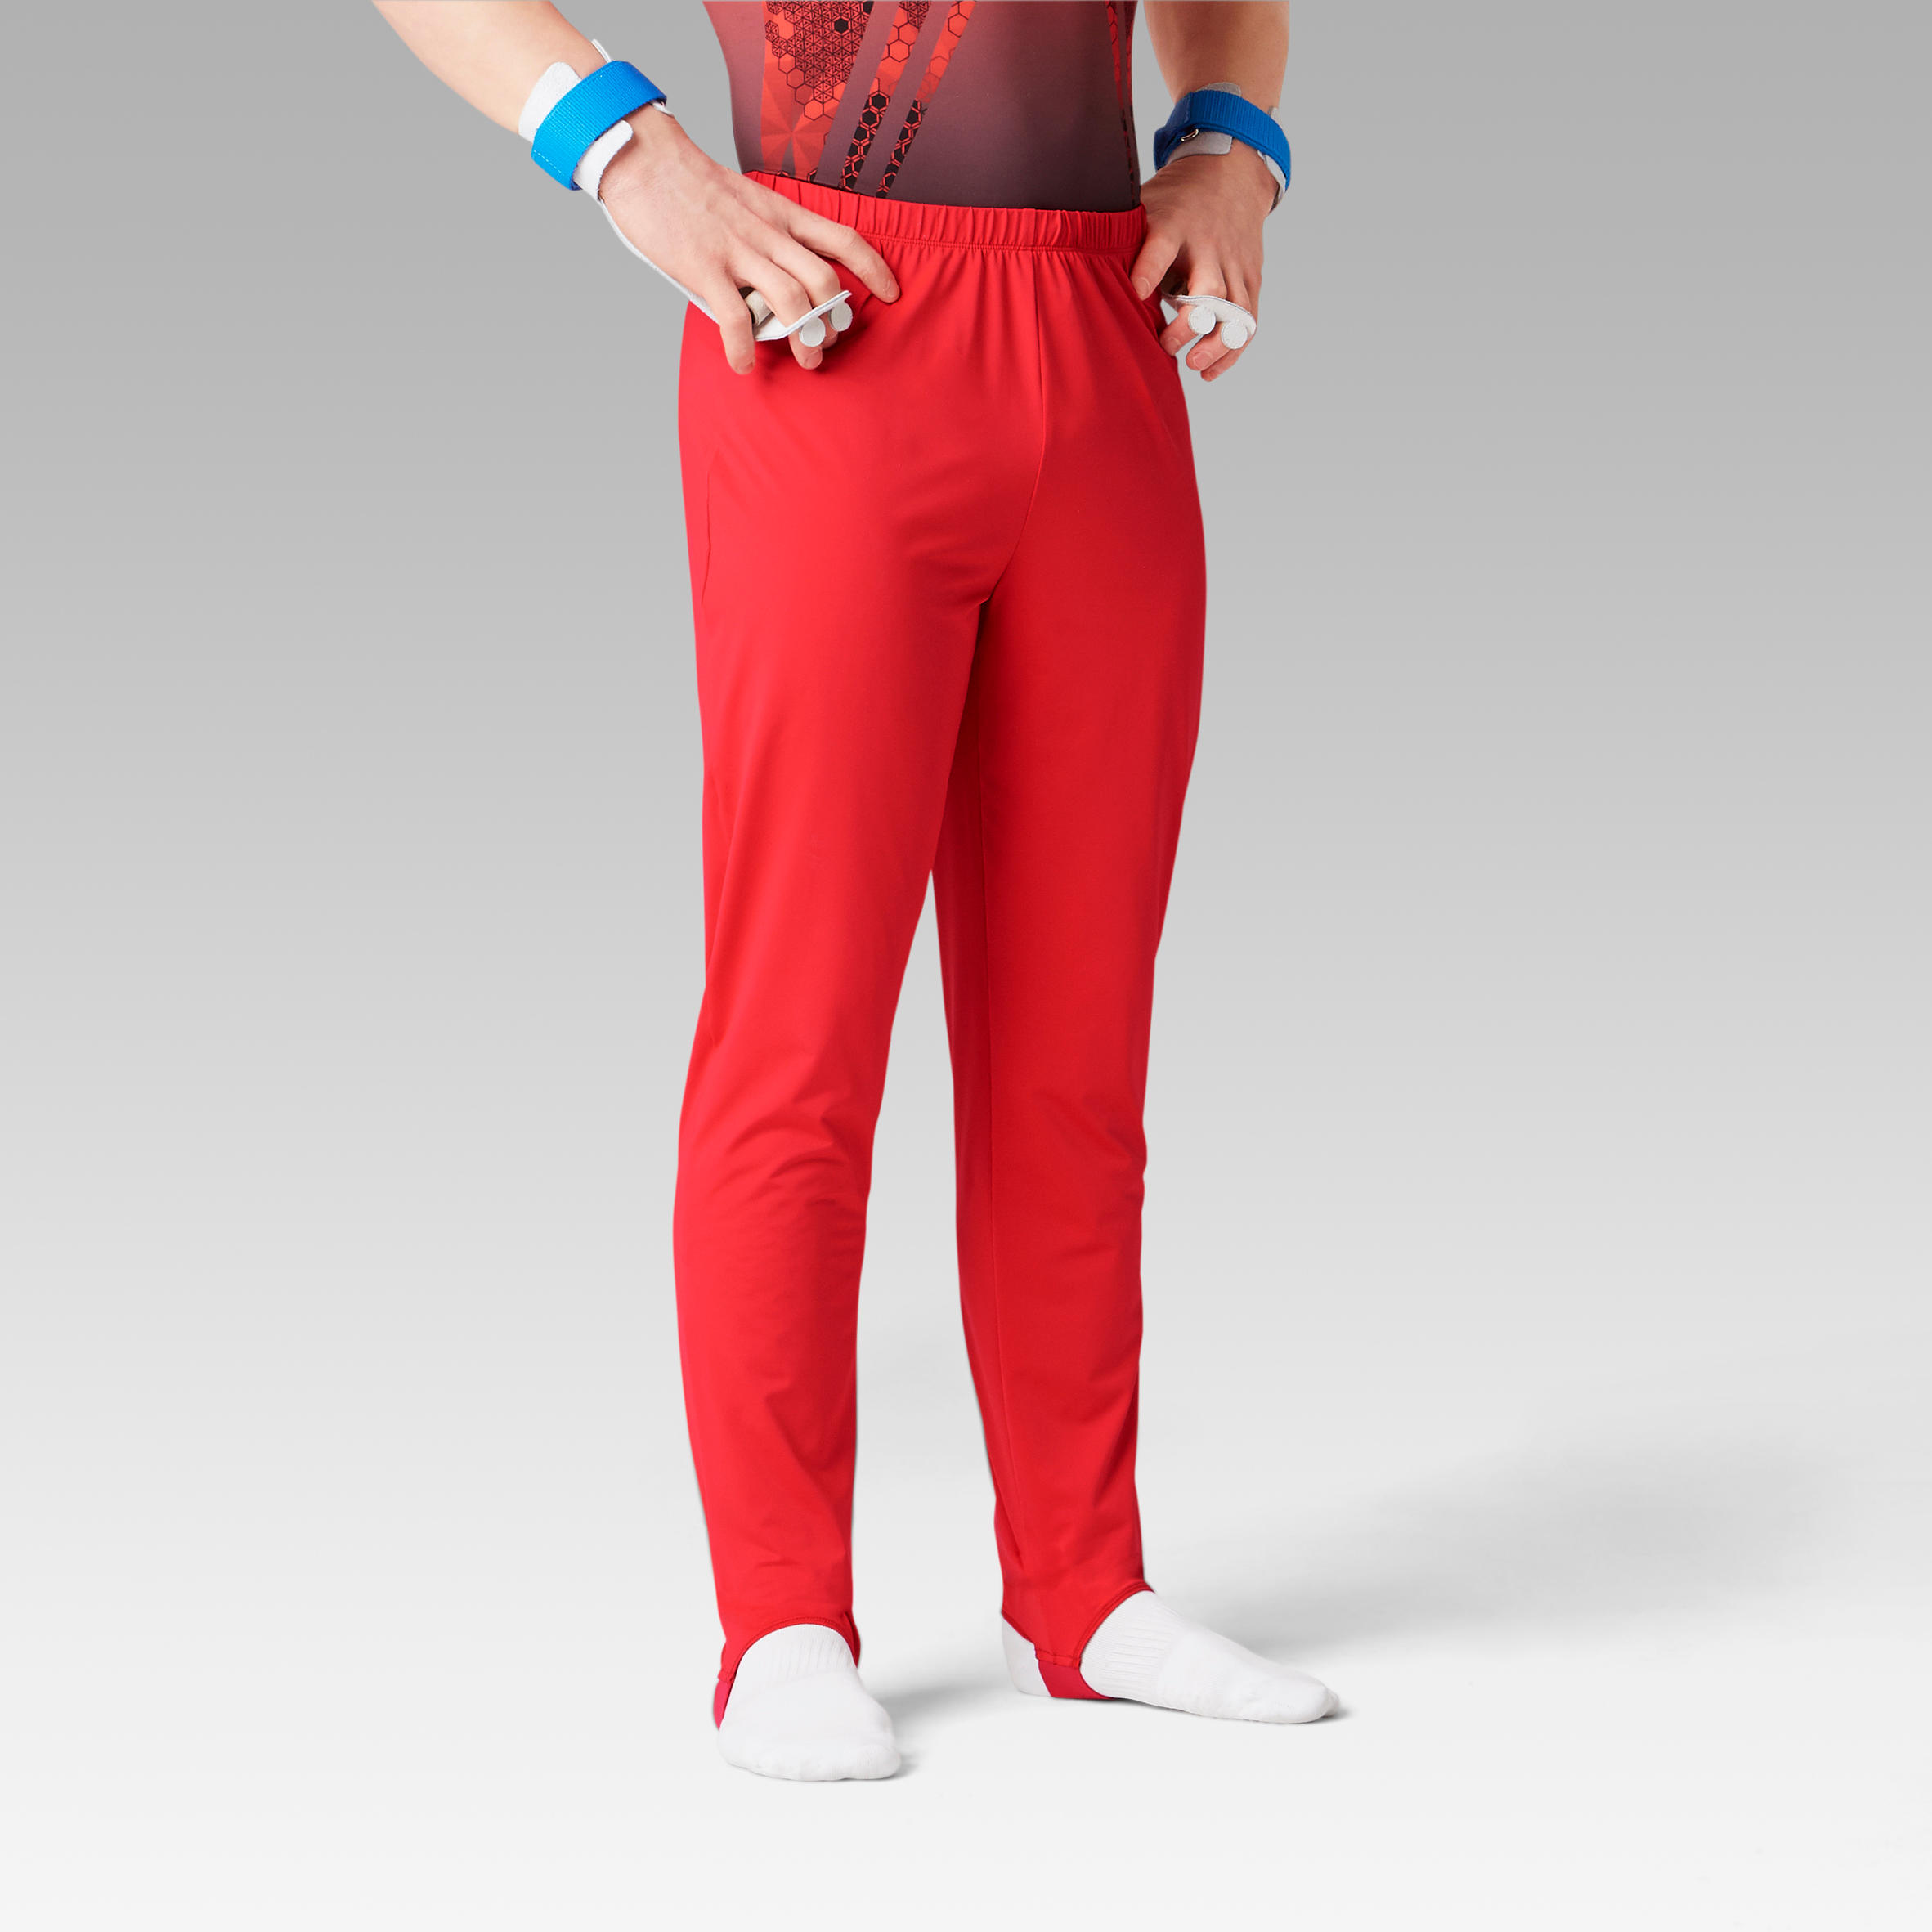 Boys' Gymnastics Stirrup Pants - Red 2/5